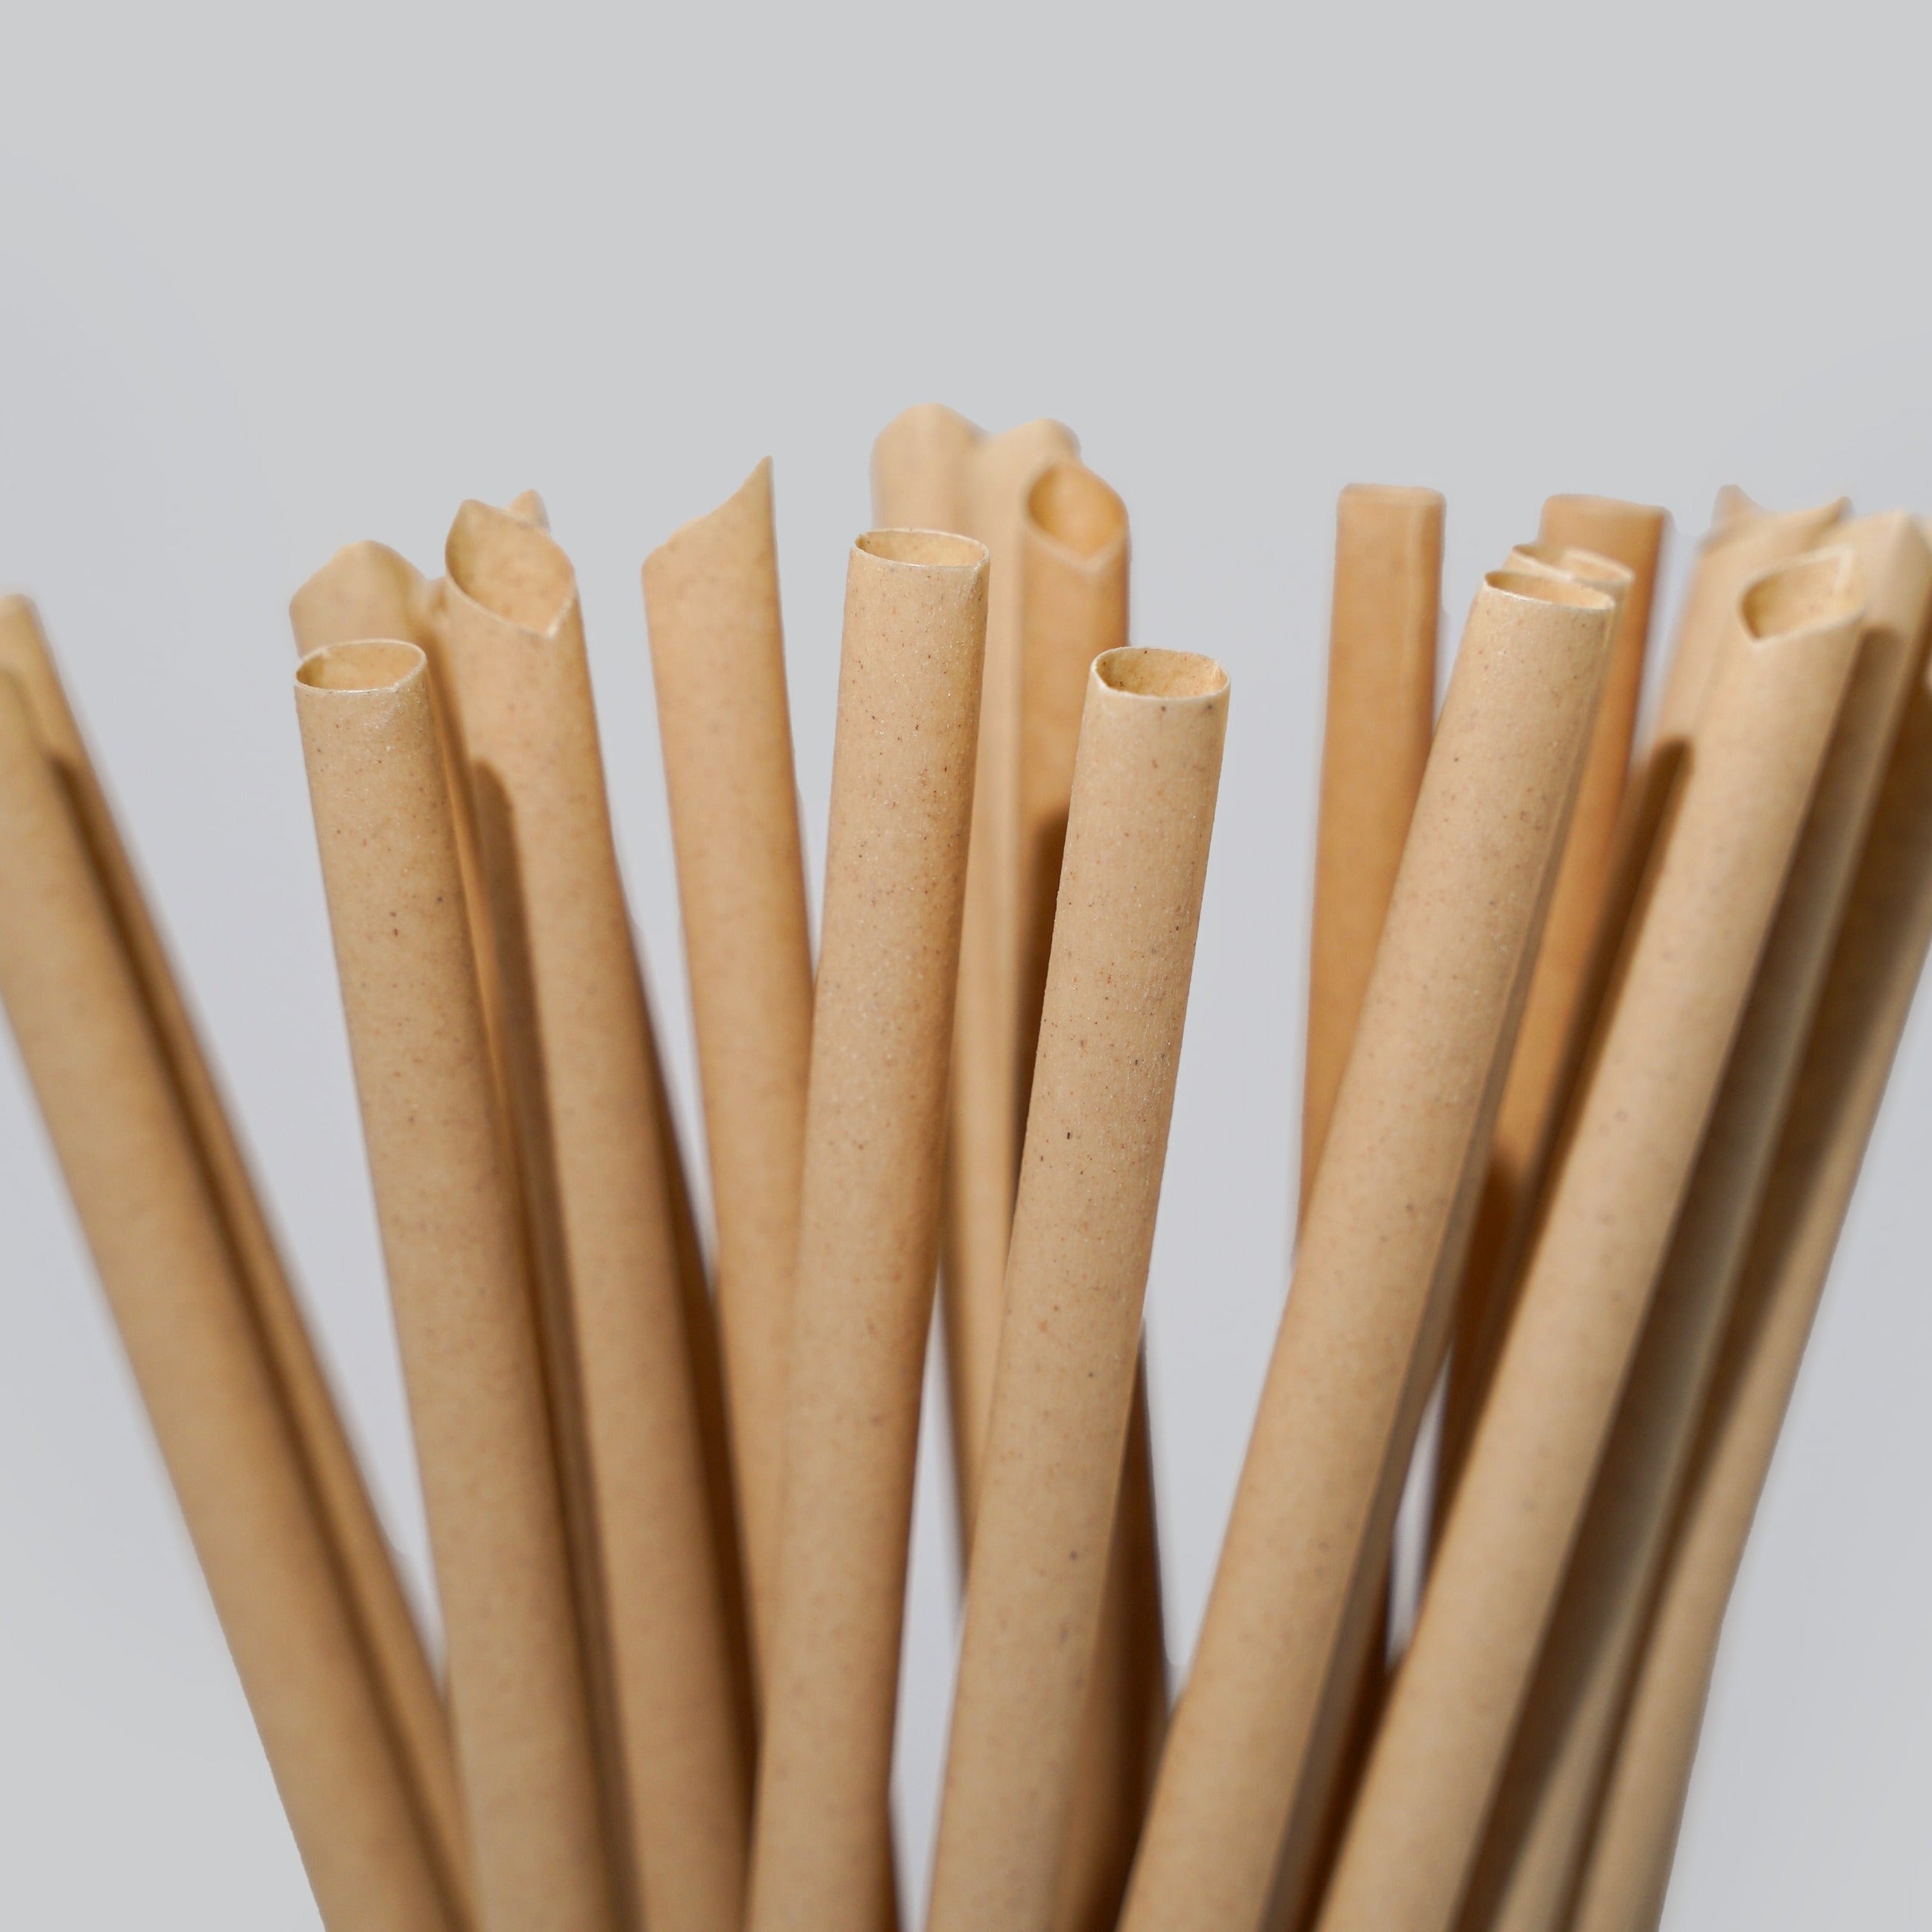 Wholesale/Bulk Sugarcane Drinking Straws, Standard Size - Great